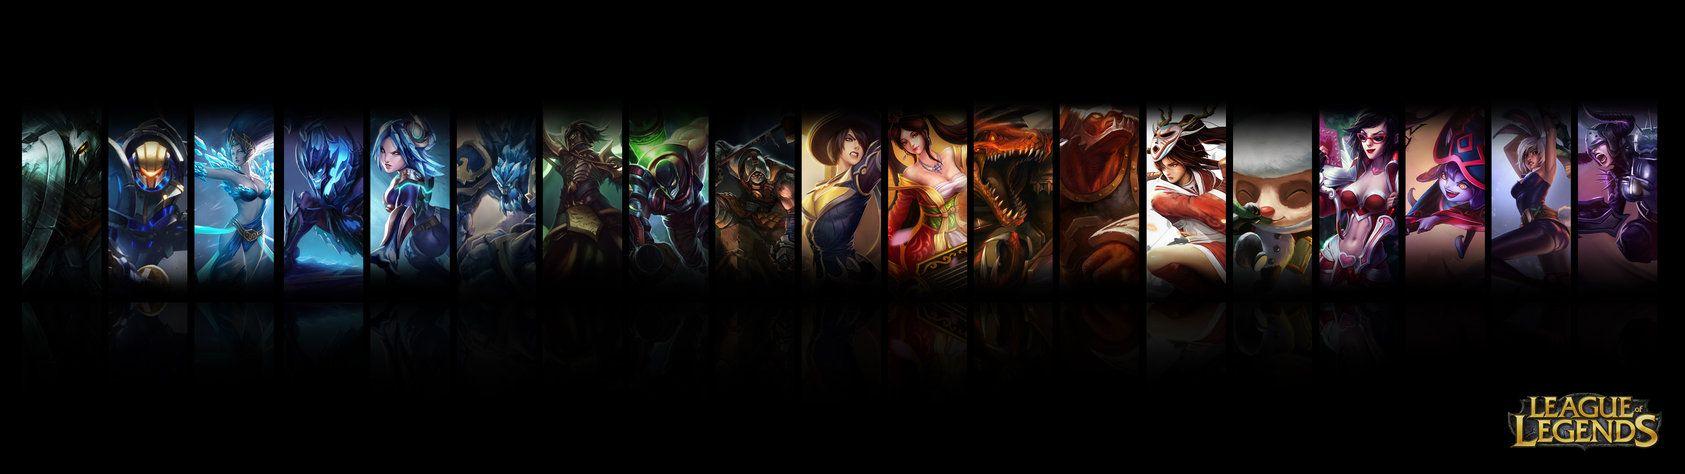 League Of Legends Dual Screen Wallpapers Top Free League